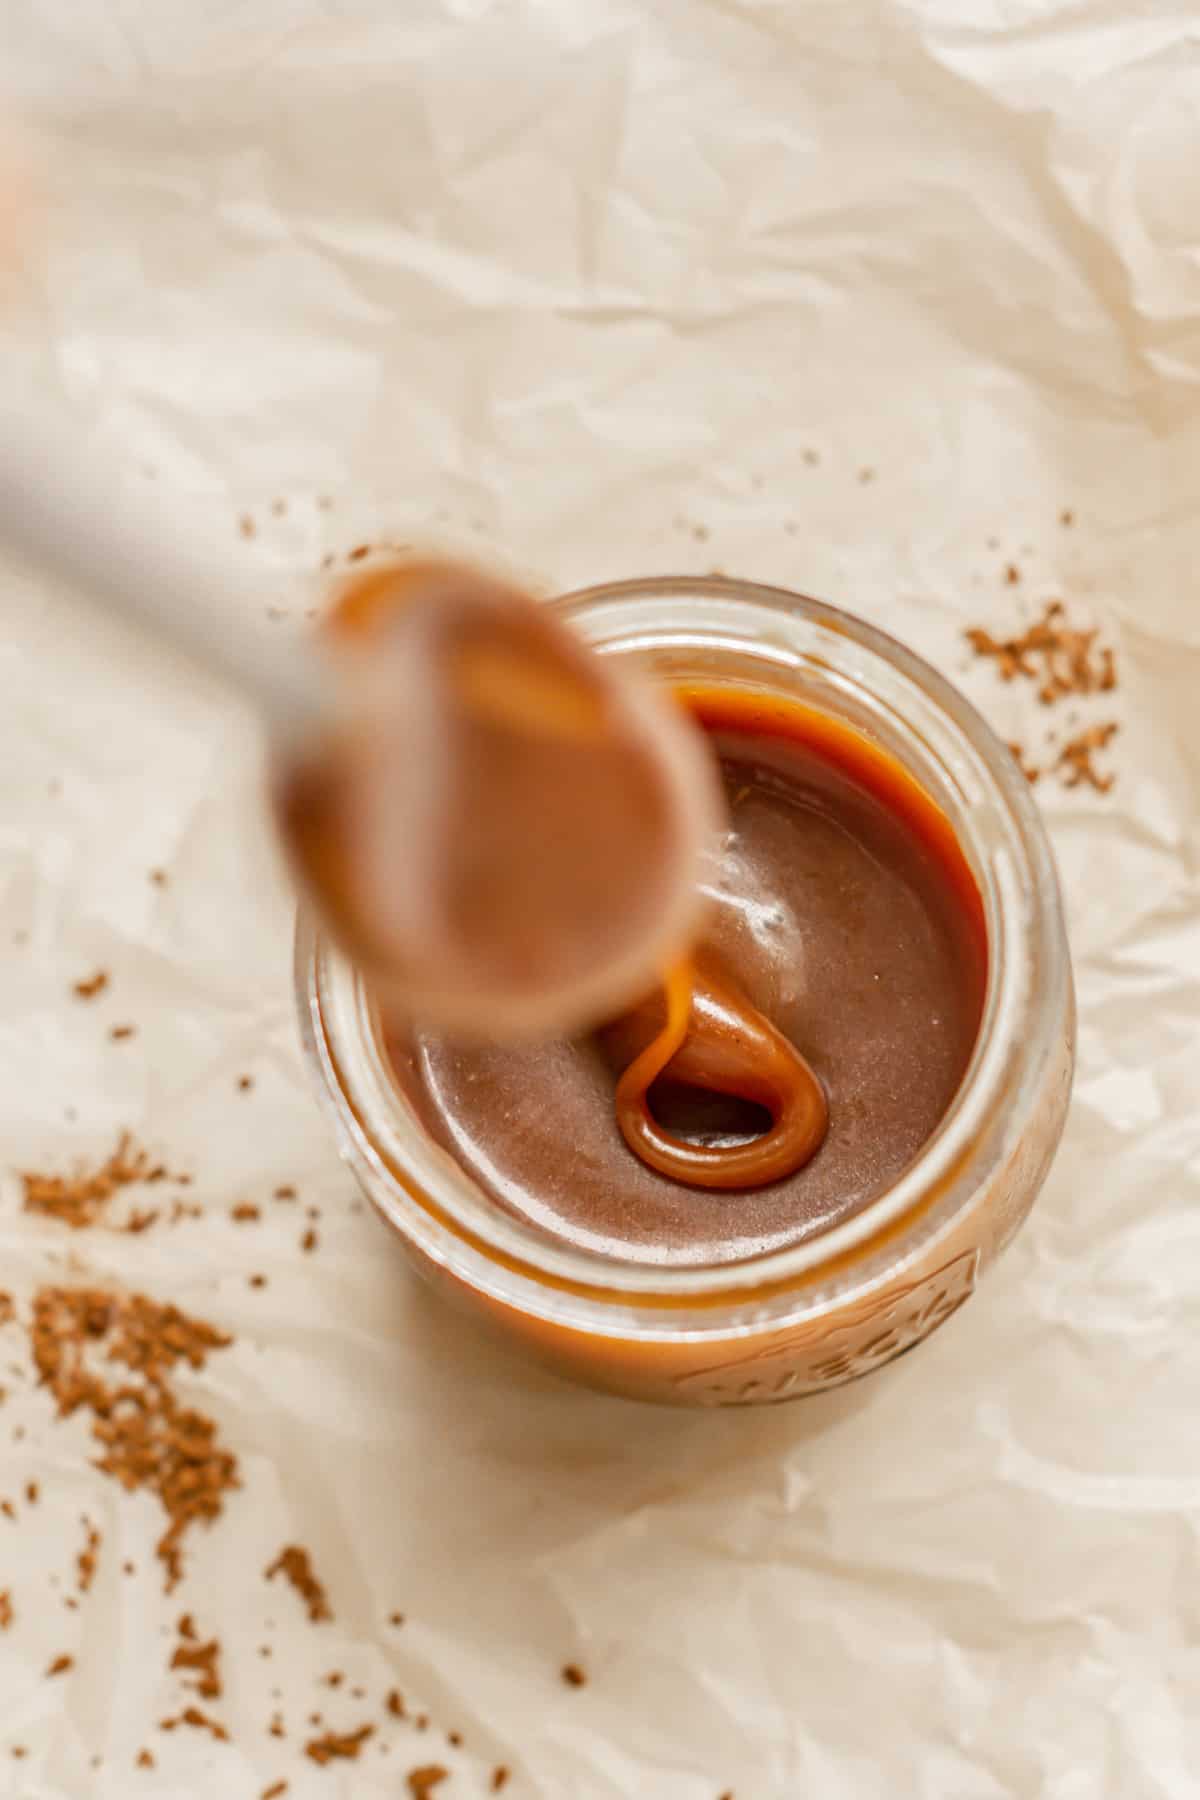 a spoon dripping caramel.